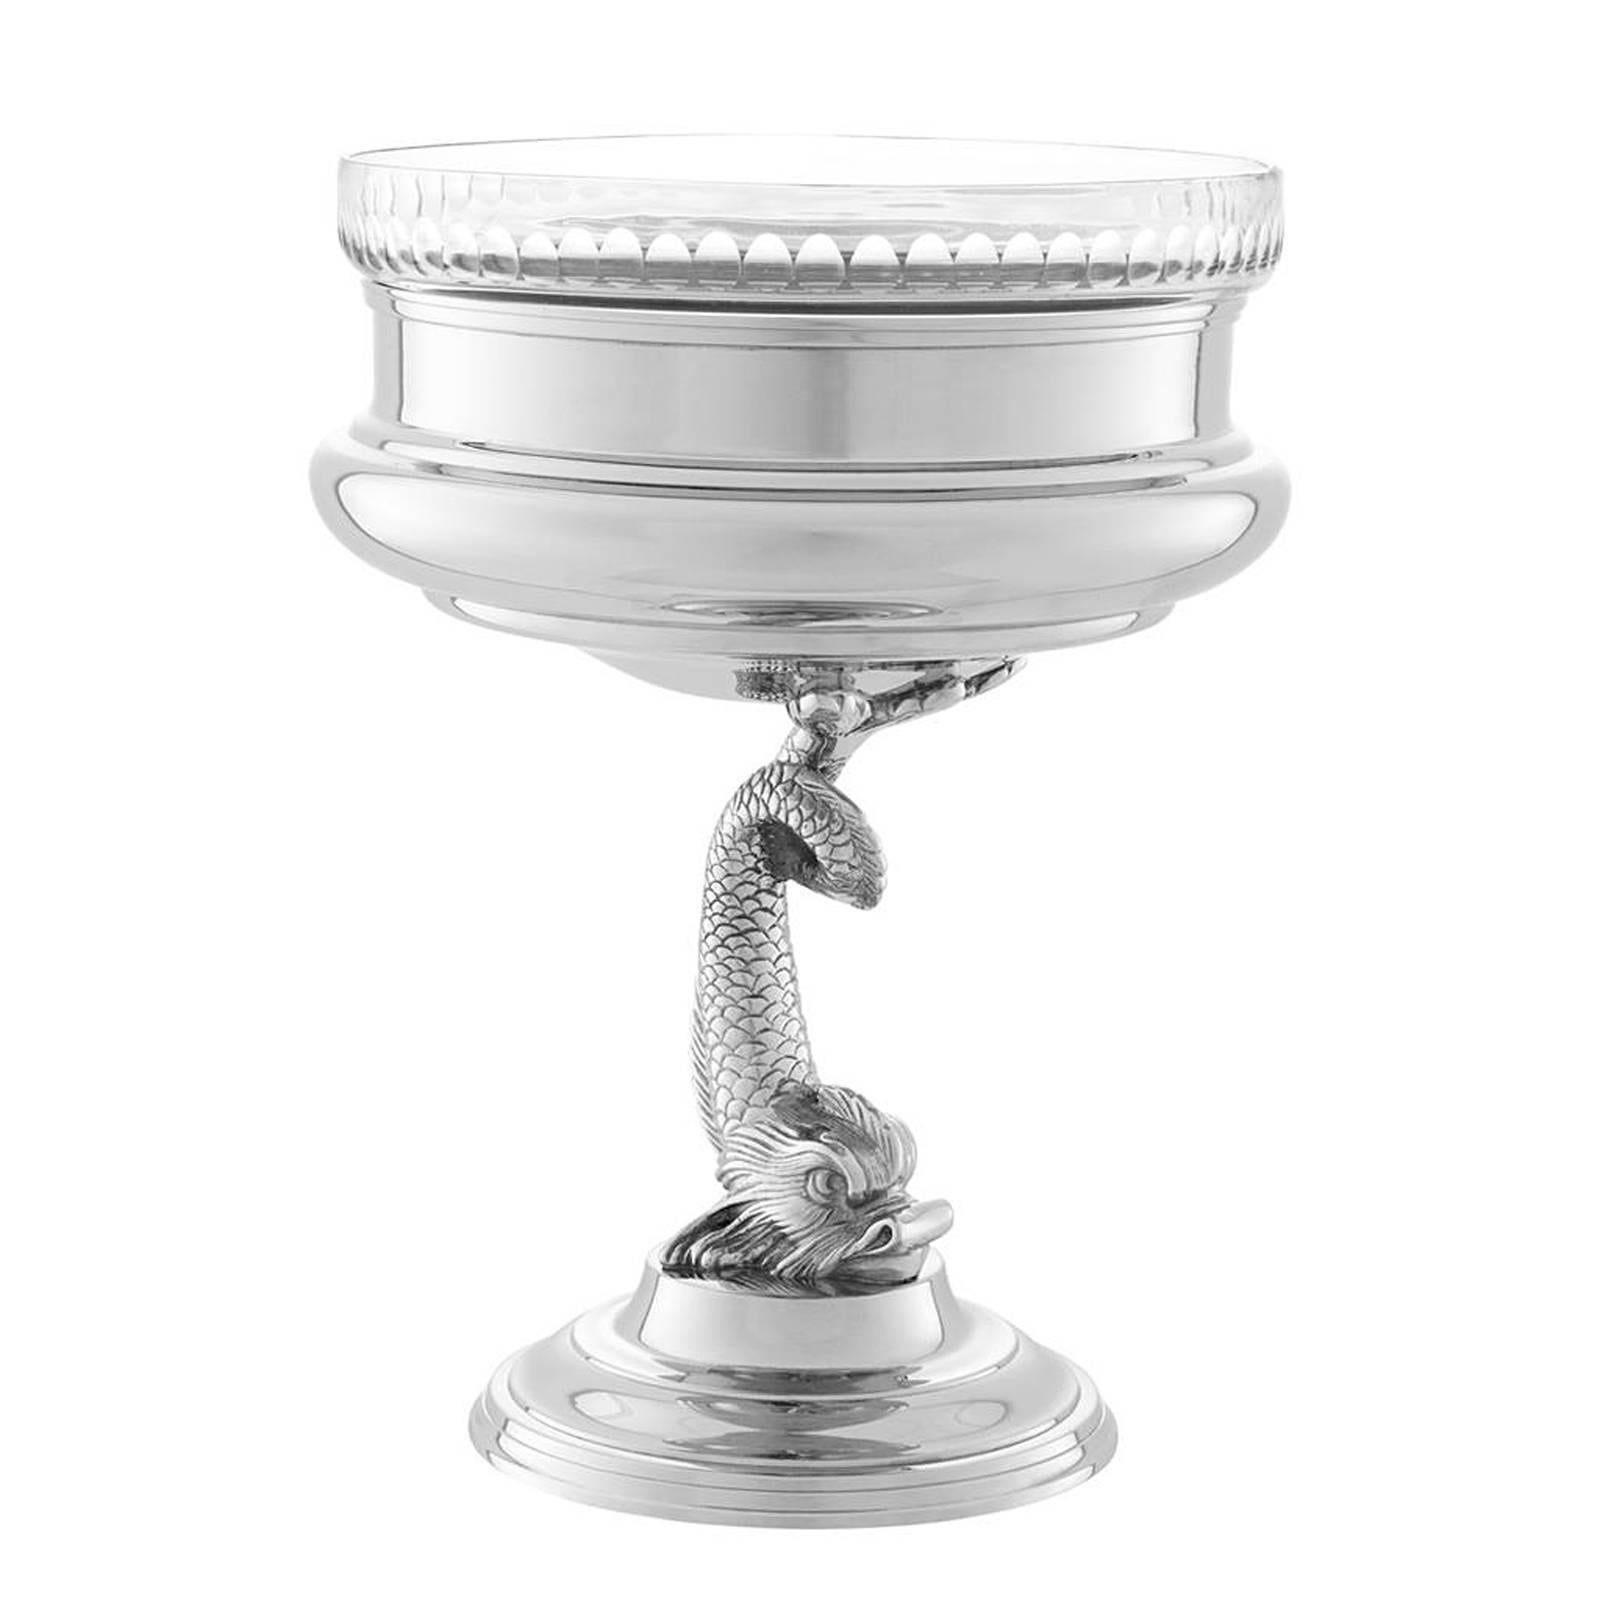 Dragon Bowl or Caviar Cup in Nickel Finish